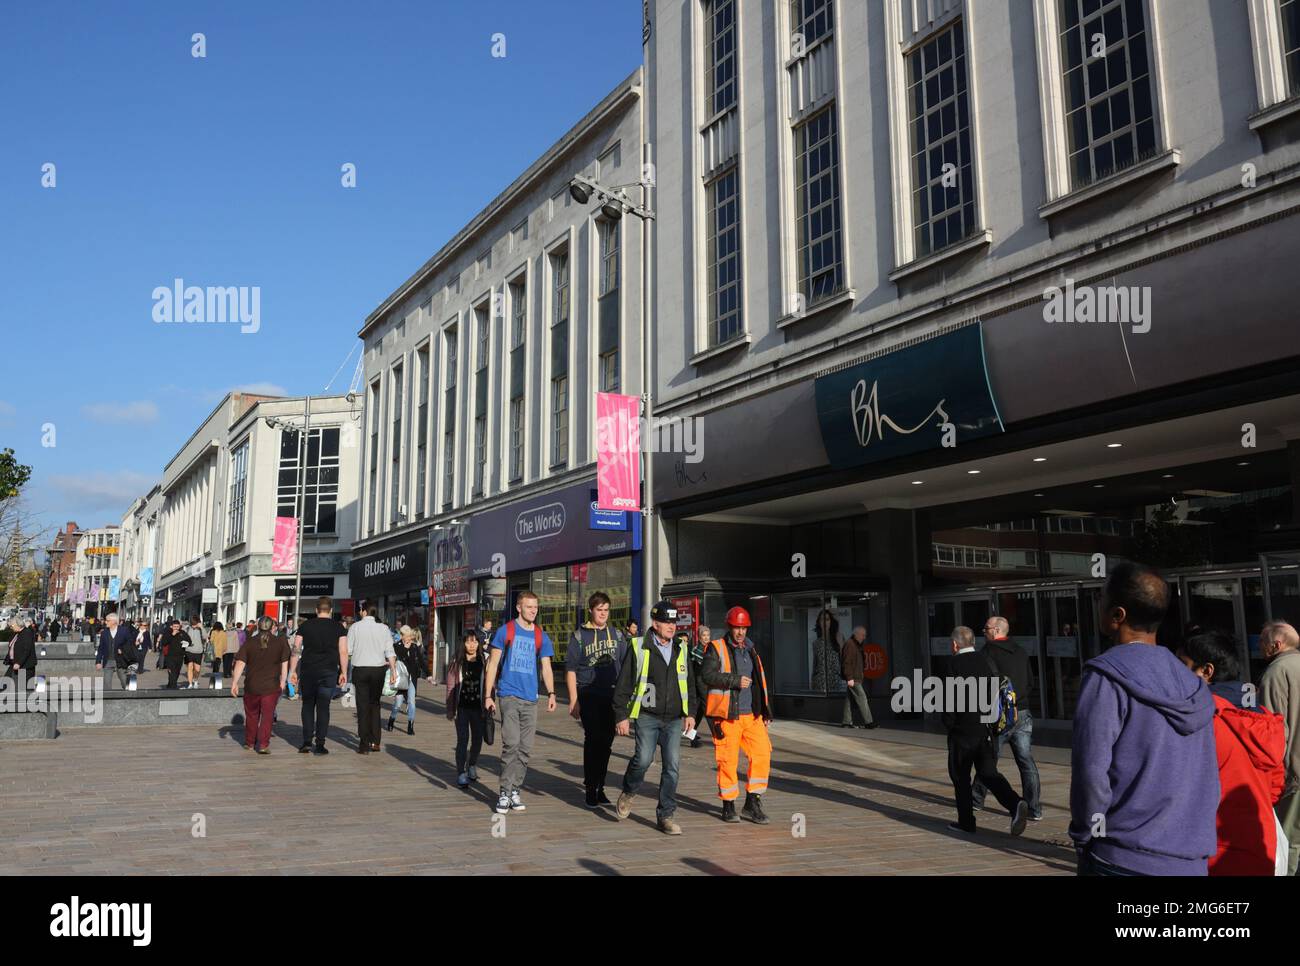 The Moor Shopping precinct, Sheffield city centre England UK, People shoppers walking. Stock Photo